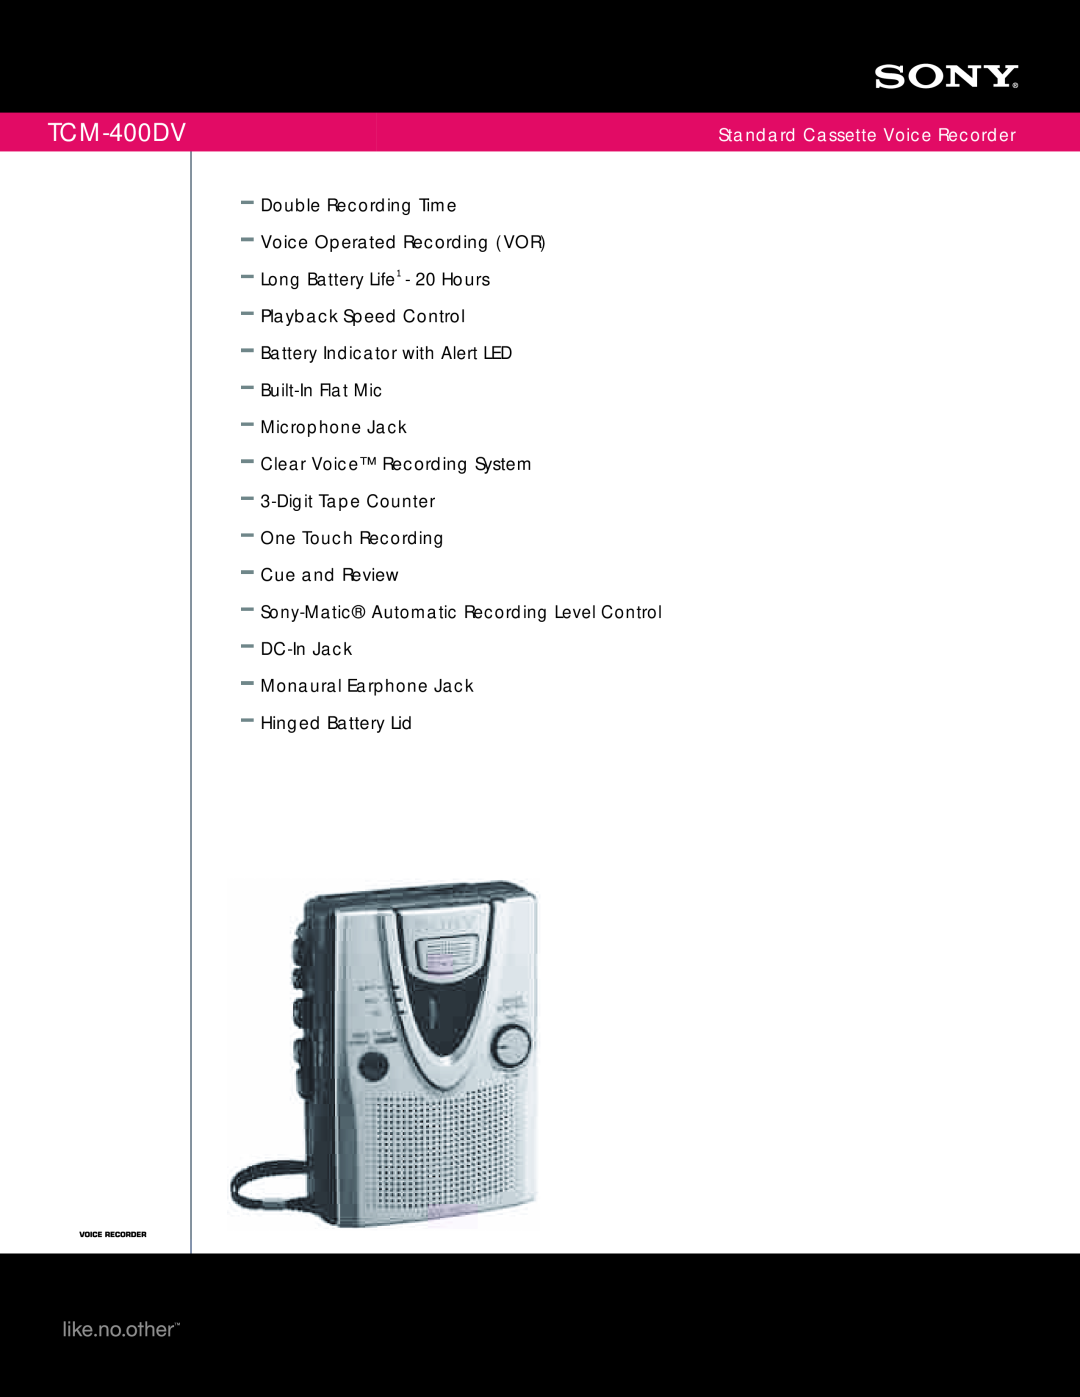 Sony TCM-400DV manual Standard Cassette Voice Recorder 